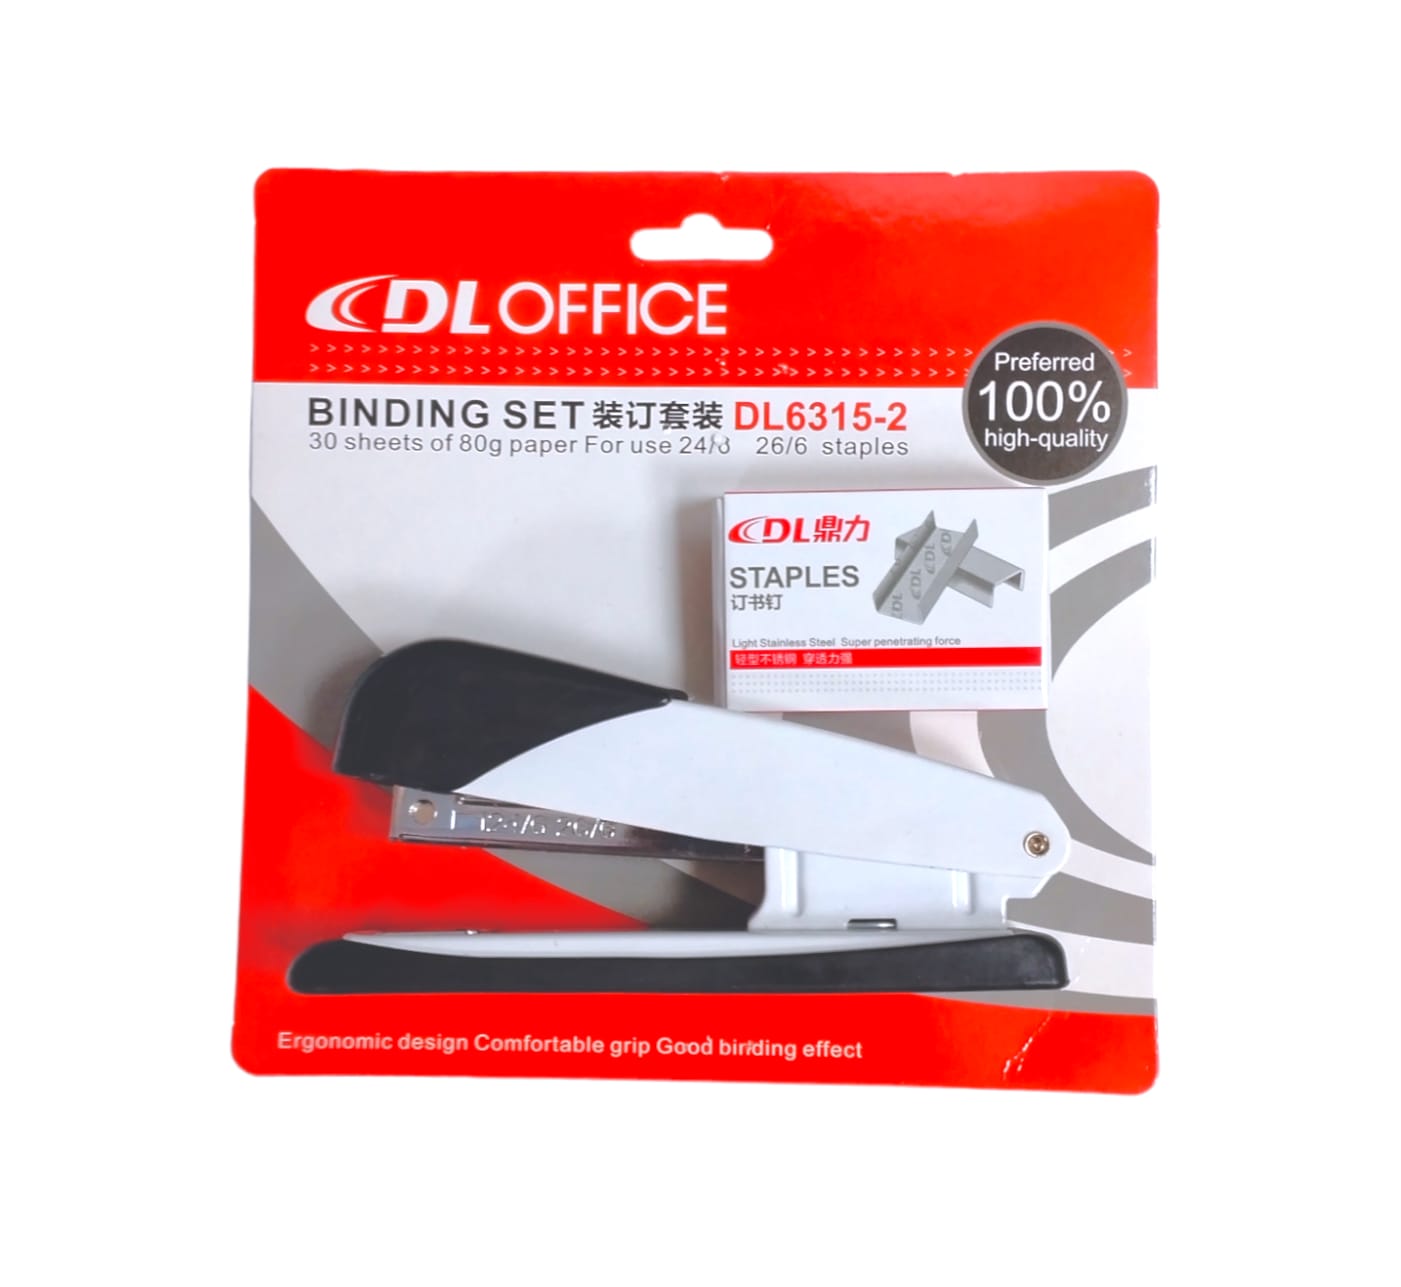 DL Office Binding Set || دباسة دي ال اوفيس